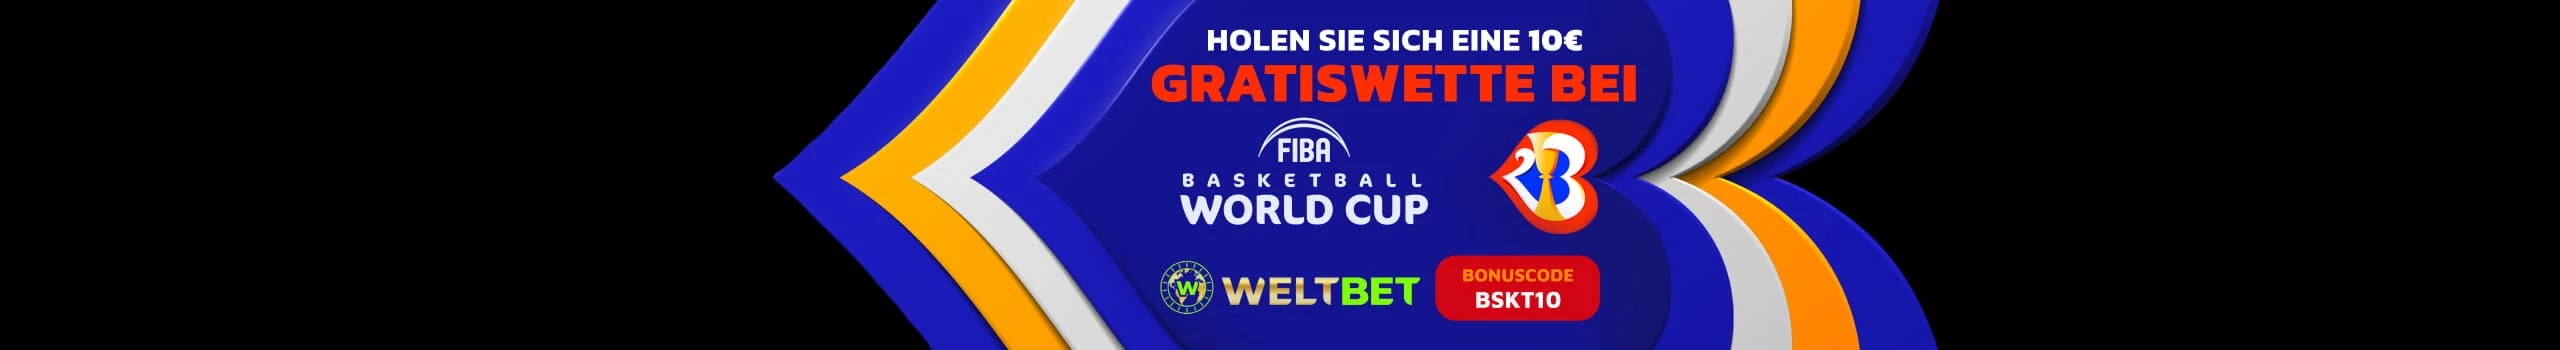 Basketball WM Bonus